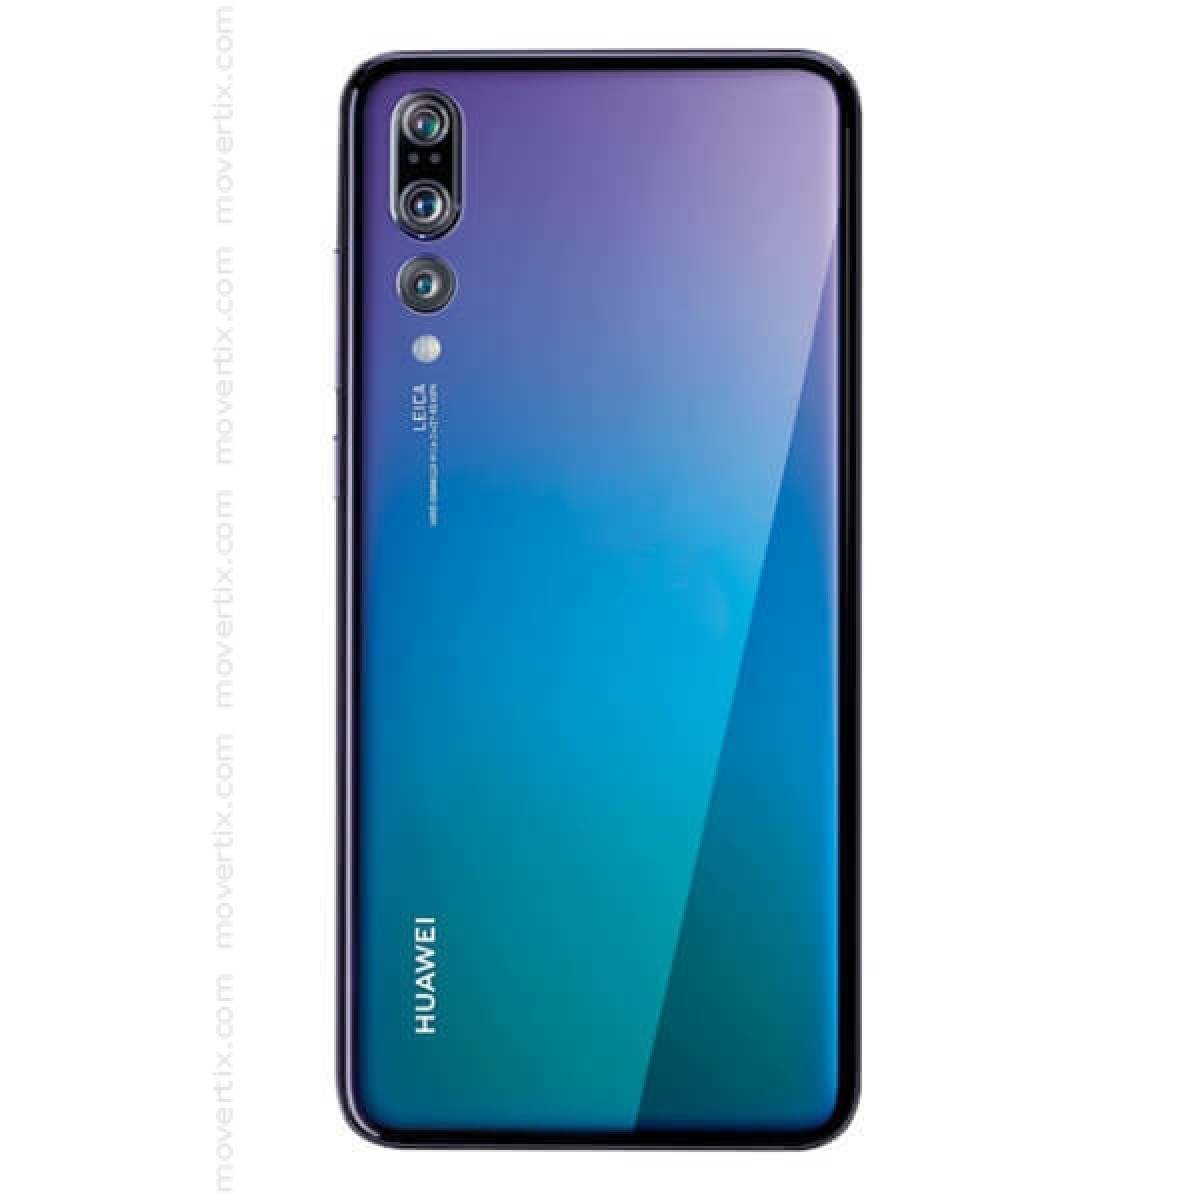 Huawei P20 Pro Twilight 128GB (6901443236060) | Movertix Mobile Phones Shop